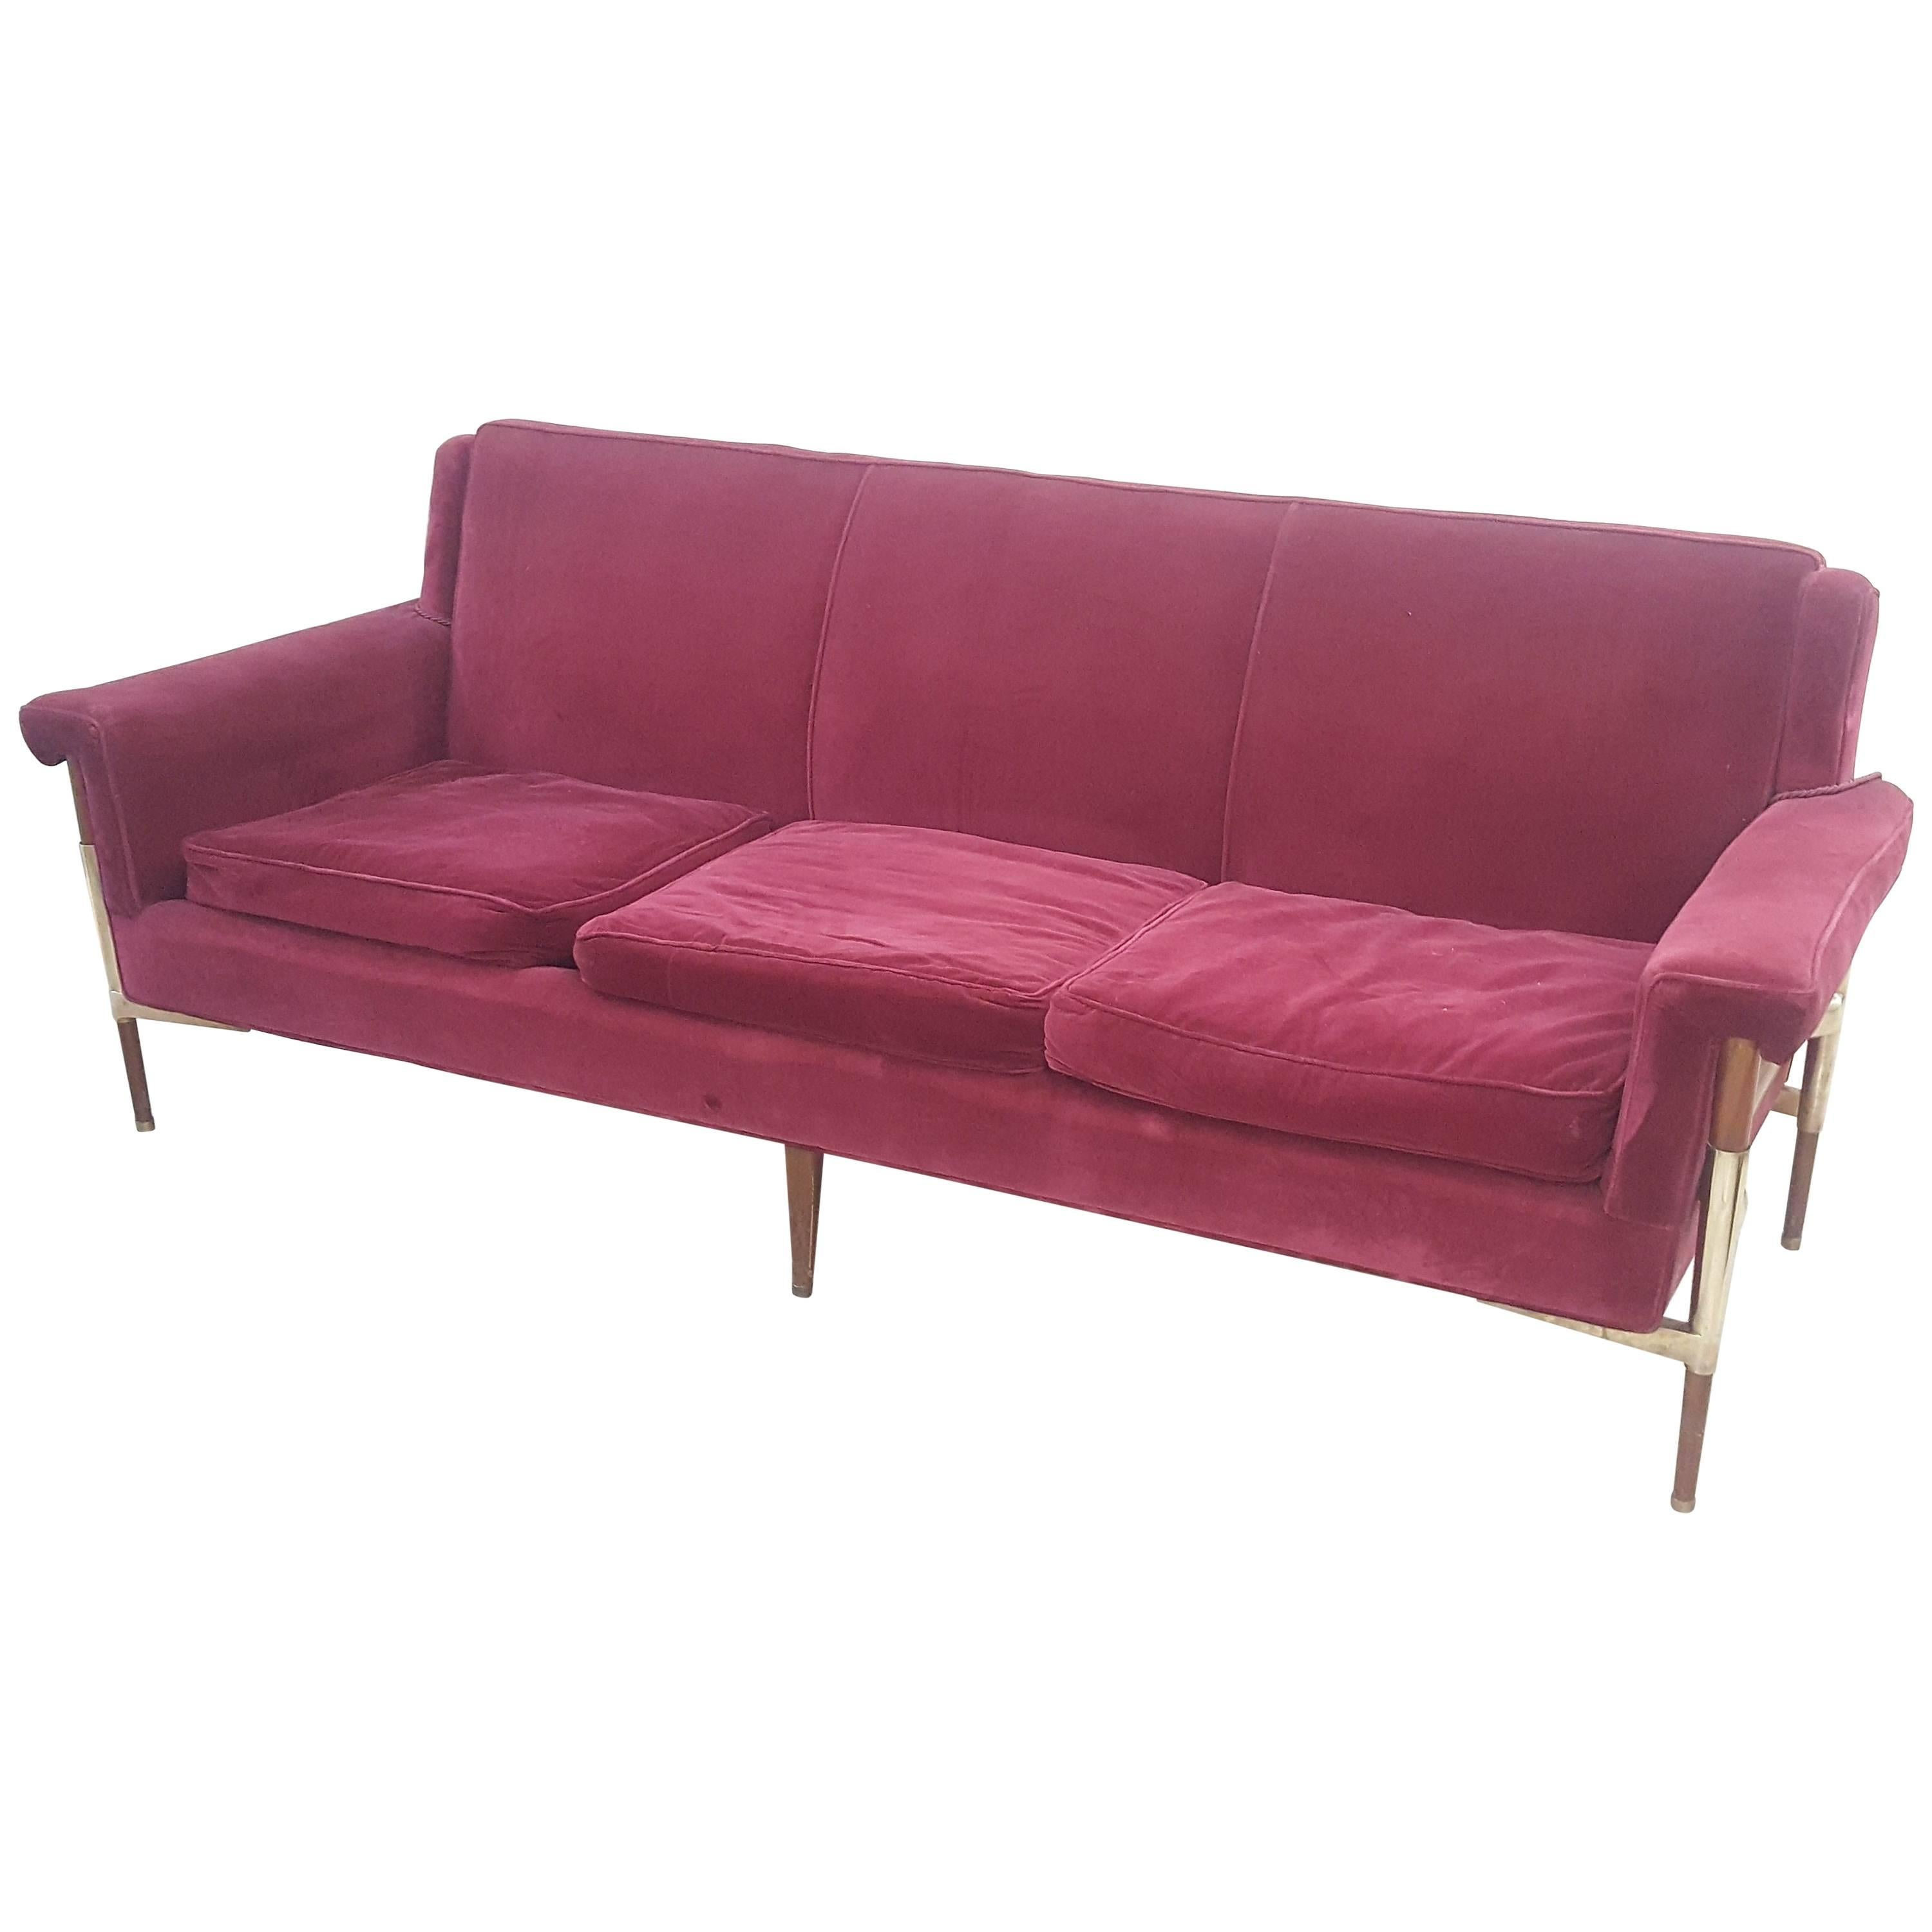 Unusual Mid-Century Modern Italian Sofa with Brass Fittings